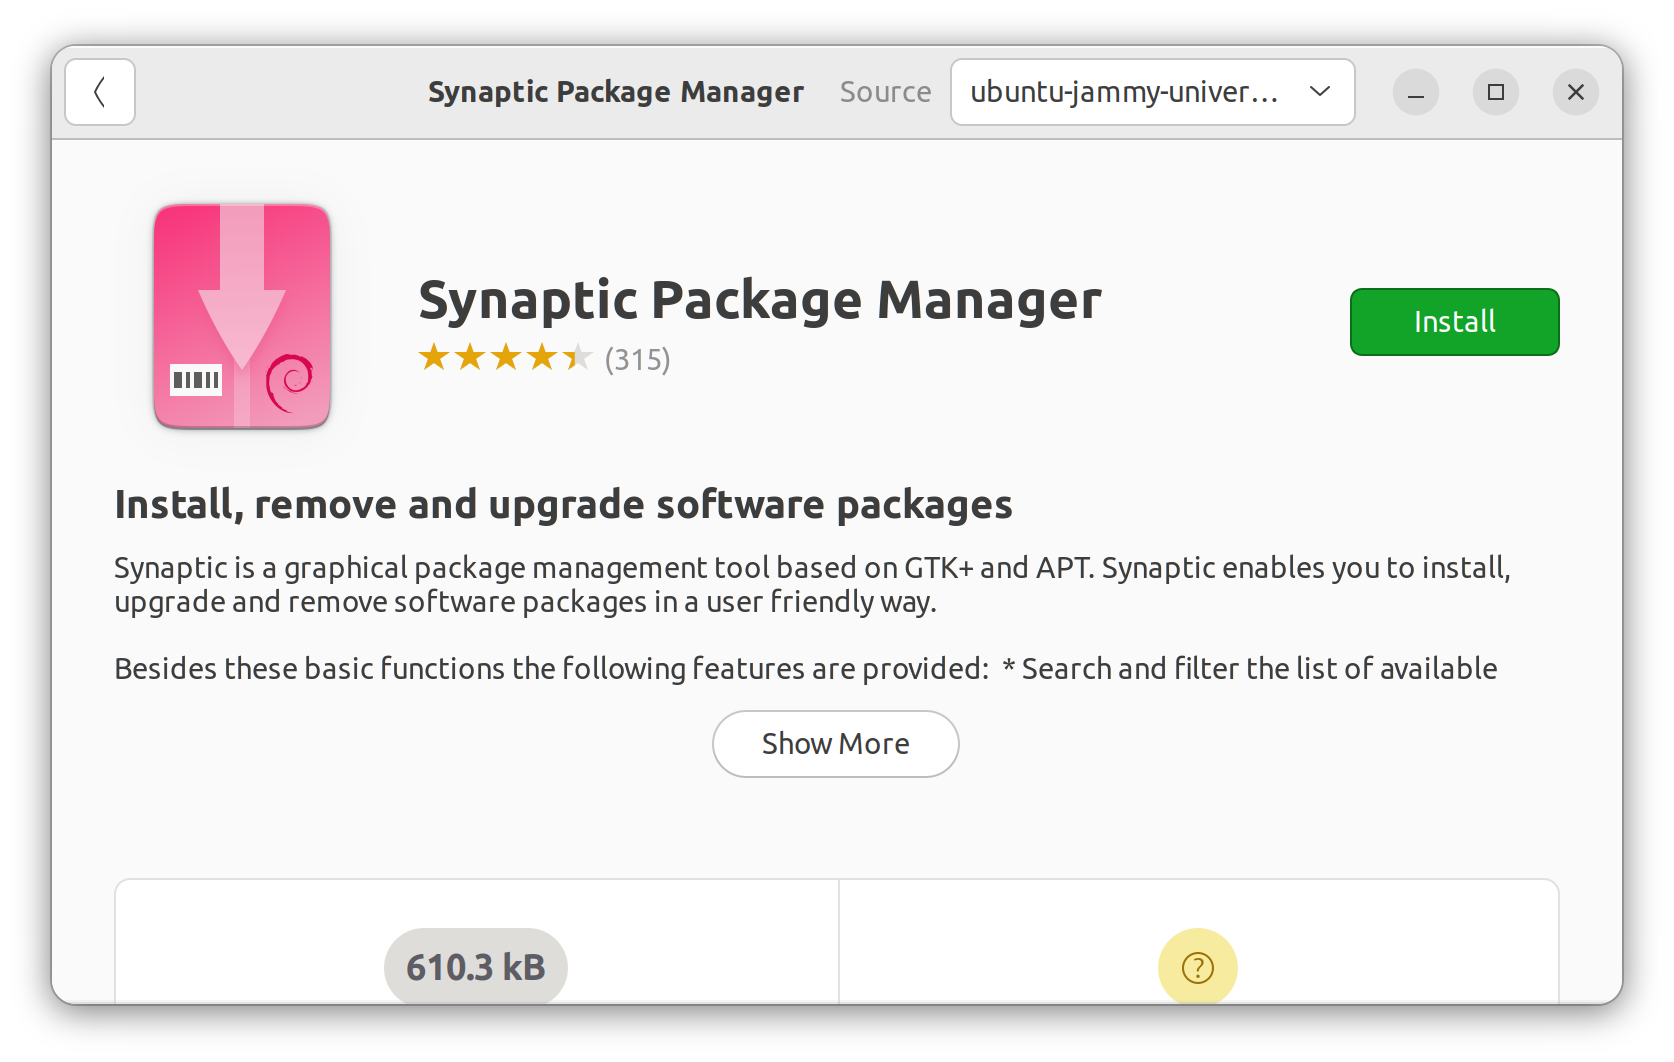 The Ubuntu Software utility Synaptic install page